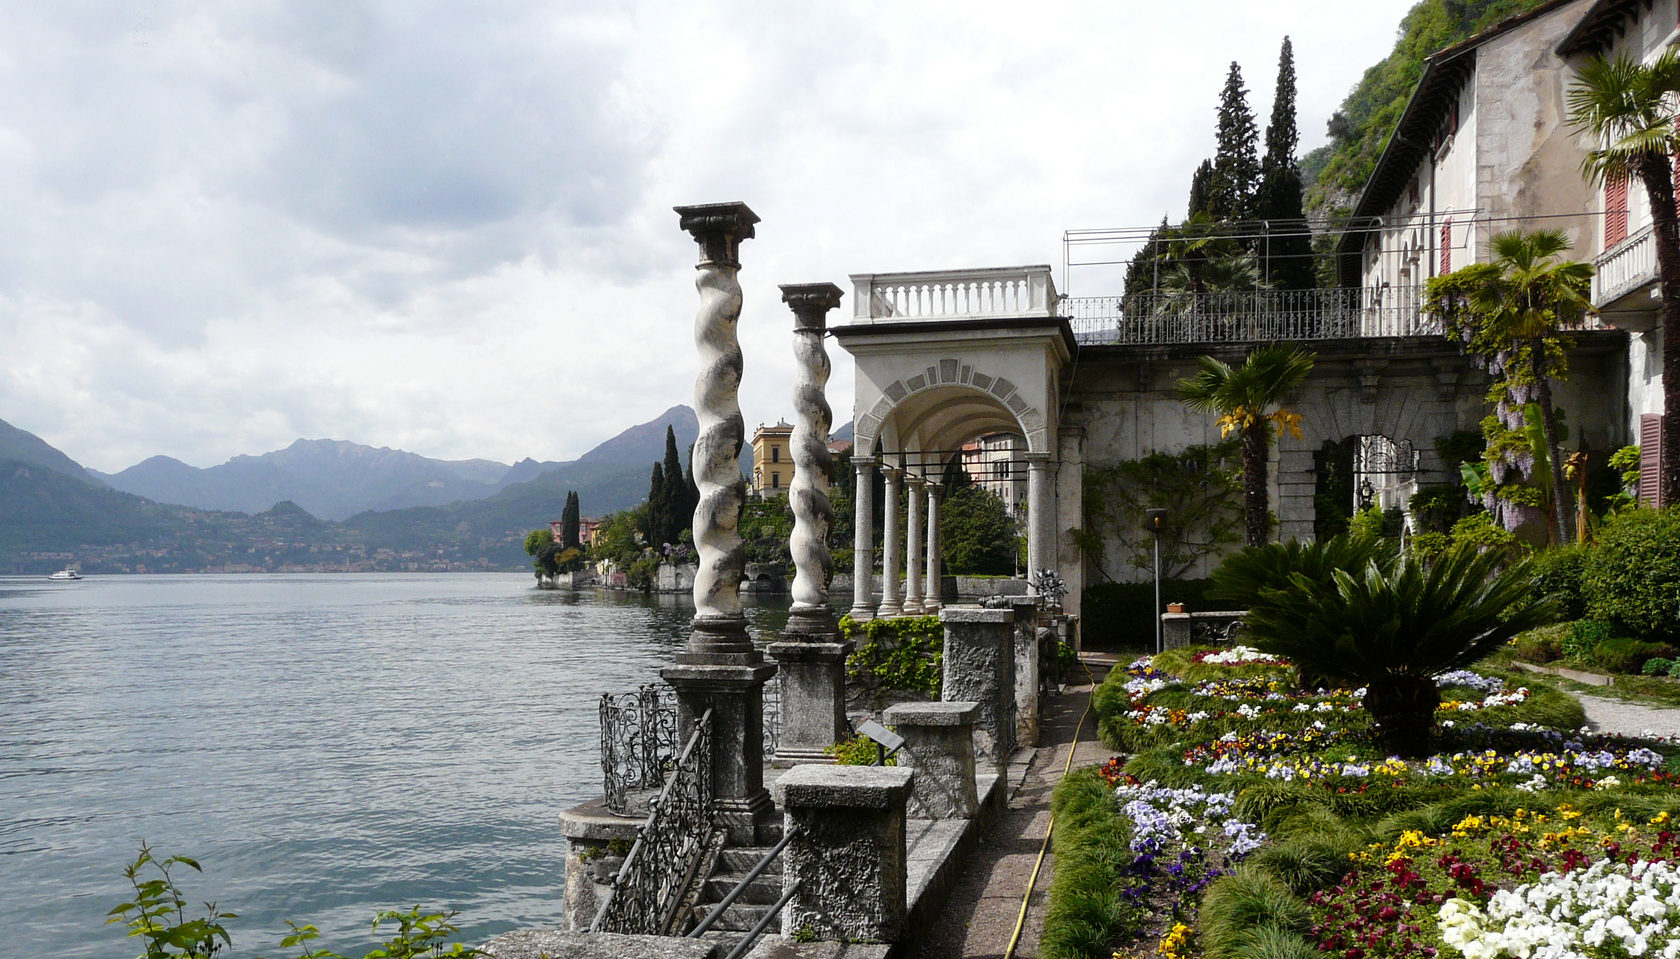 Недвижимость в Комо - купить недвижимость на озере Комо (Италия): цена на жилье на Комо